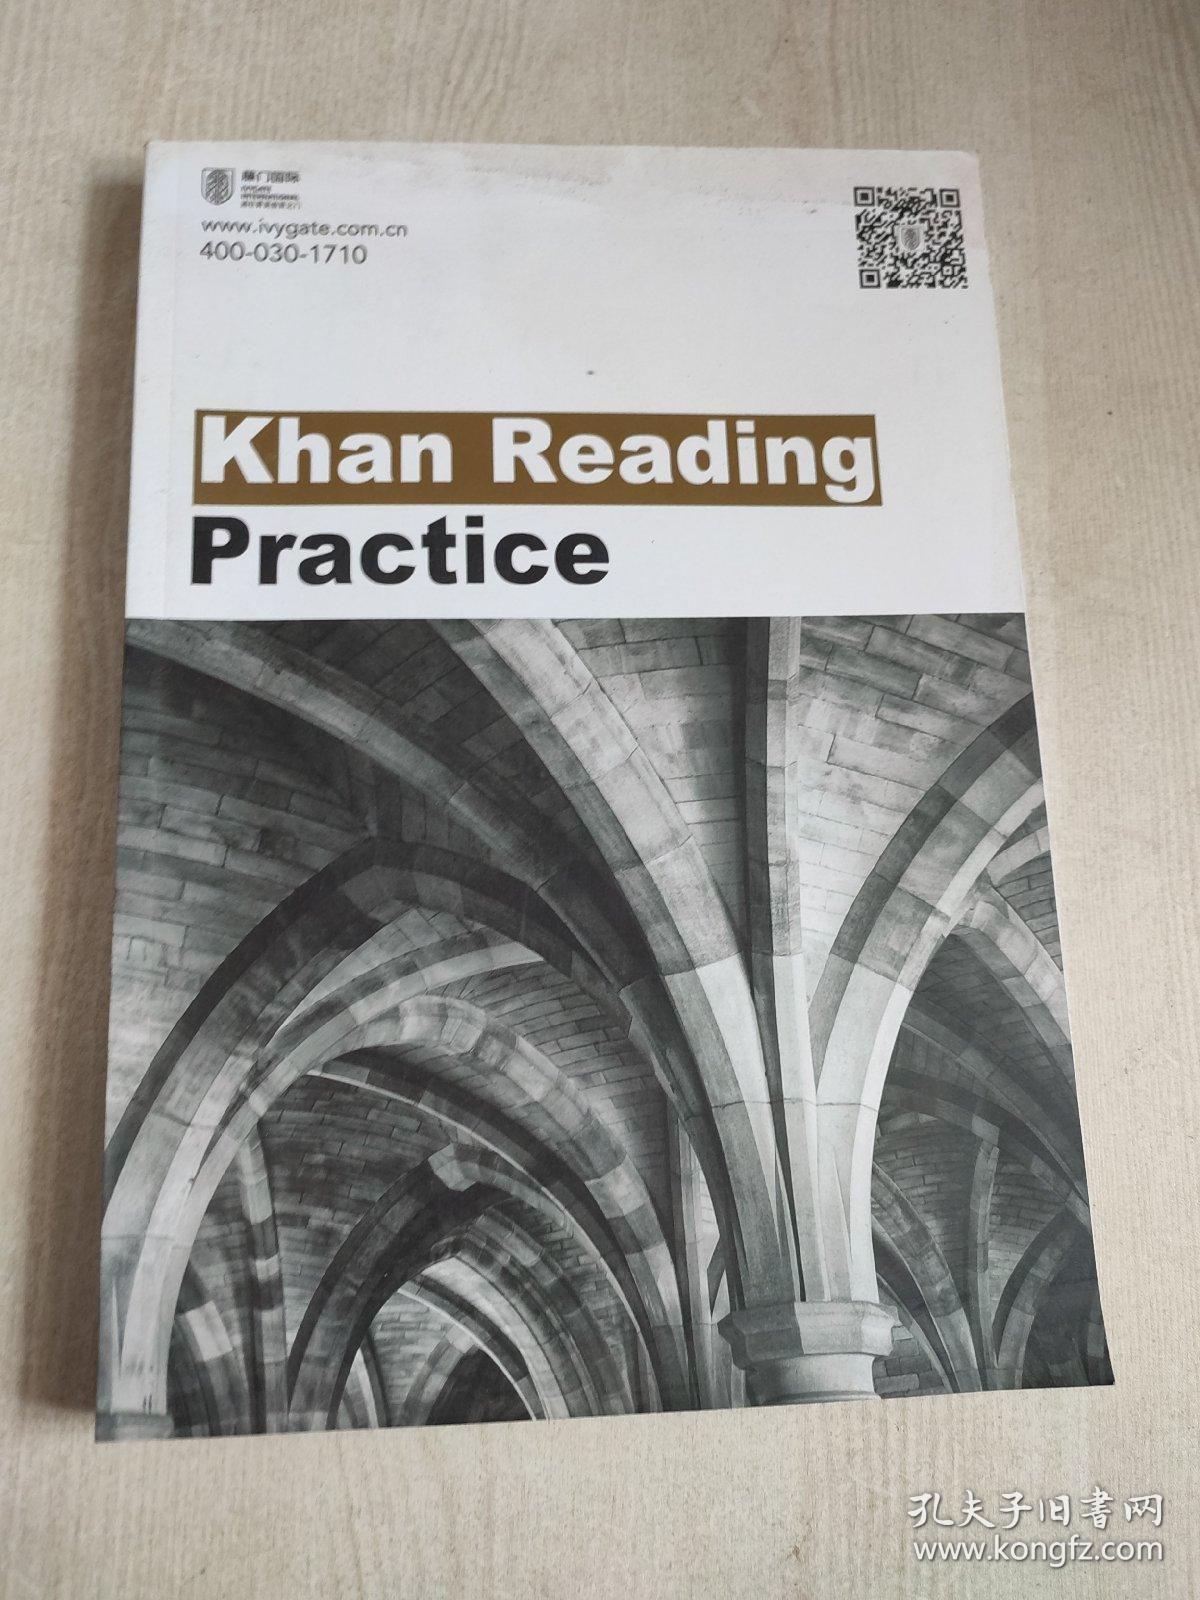 khan reading practice